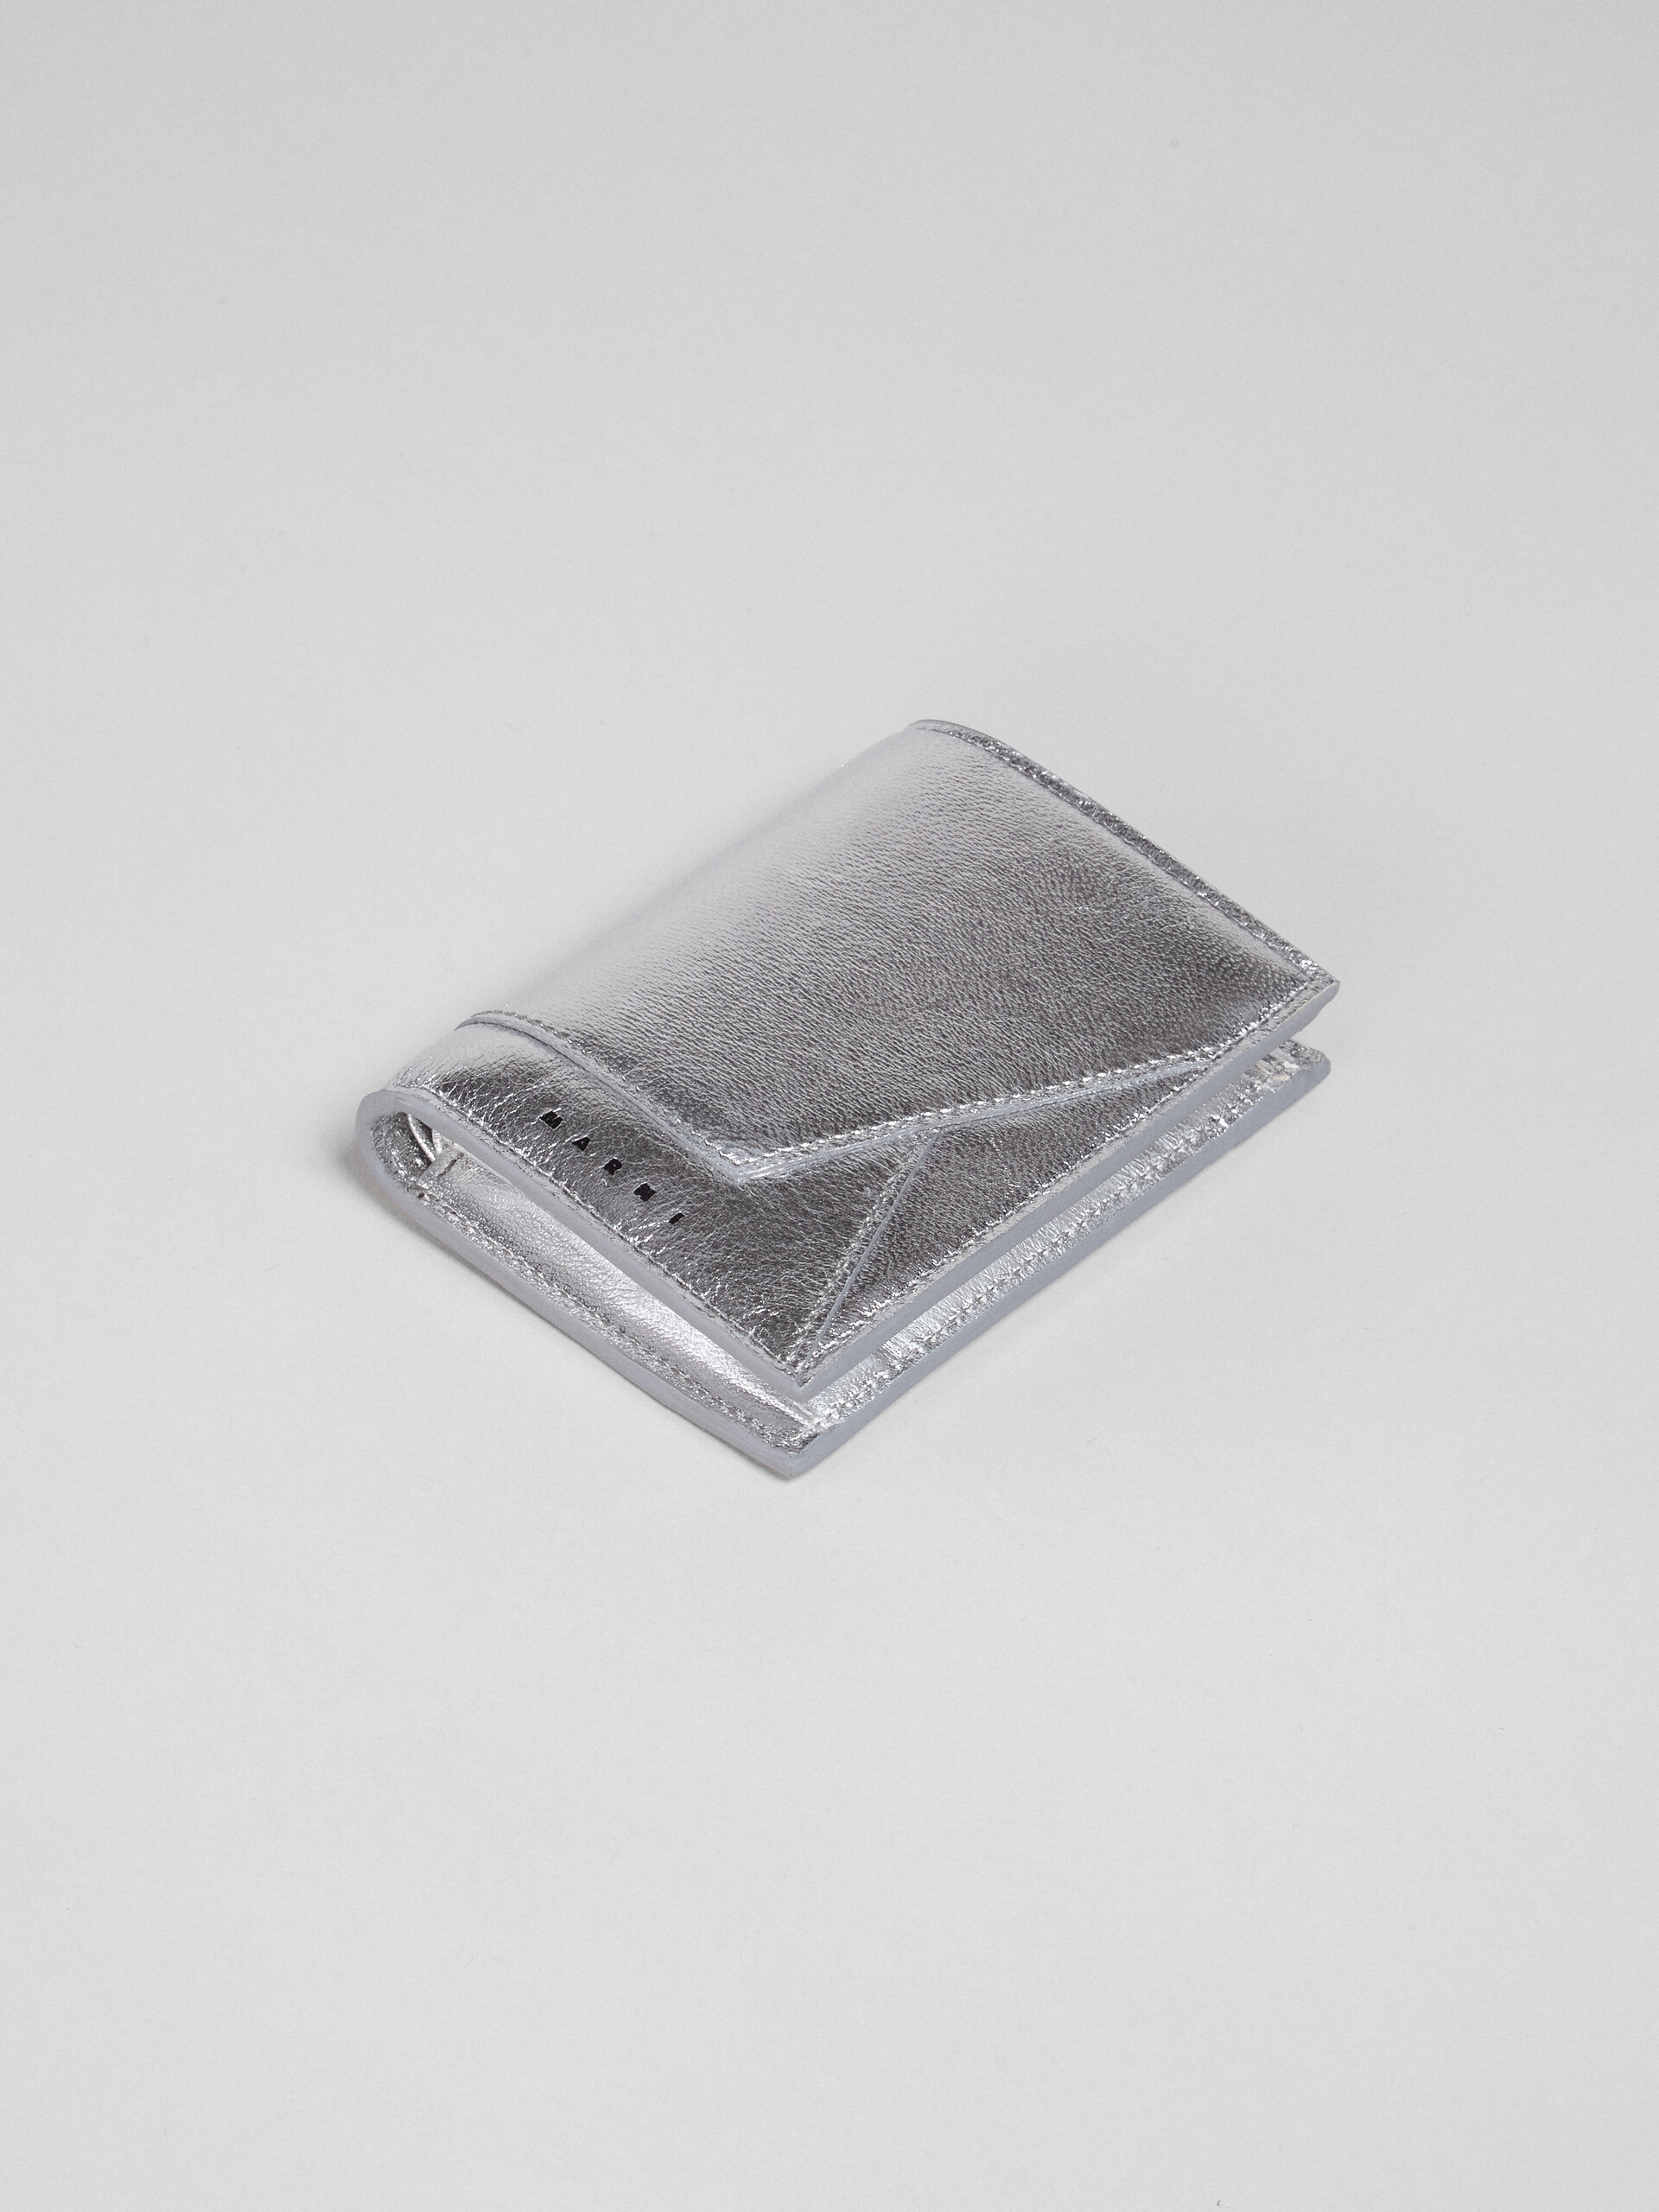 Silver metallic nappa leather bi-fold wallet - Wallets - Image 4